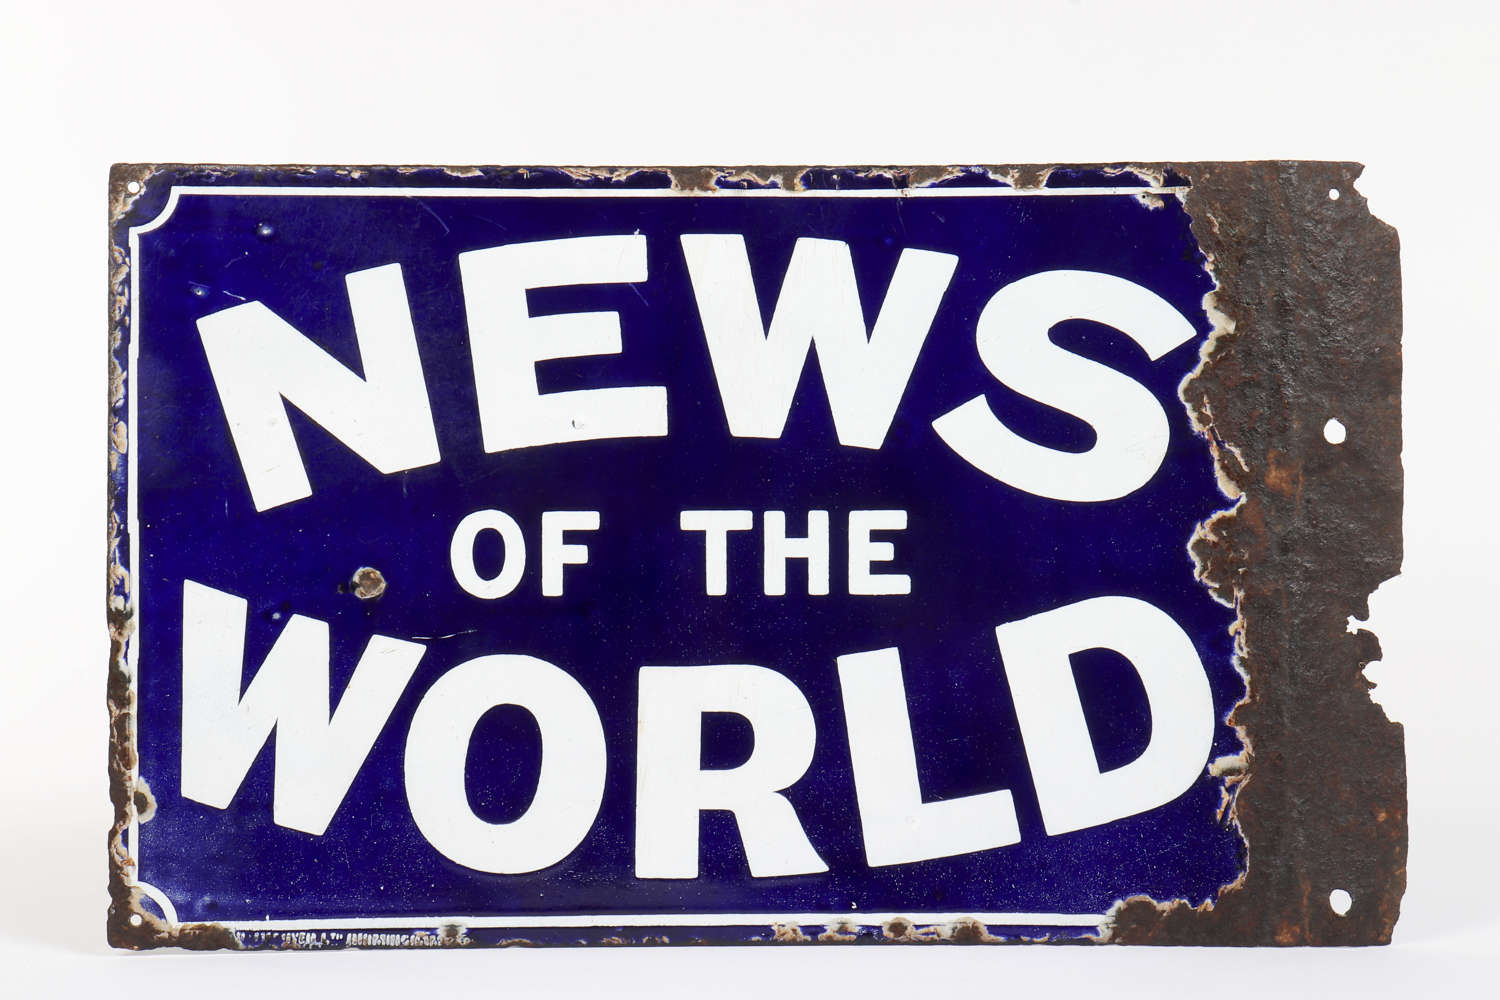 Original enamel advertising sign for News Of The World